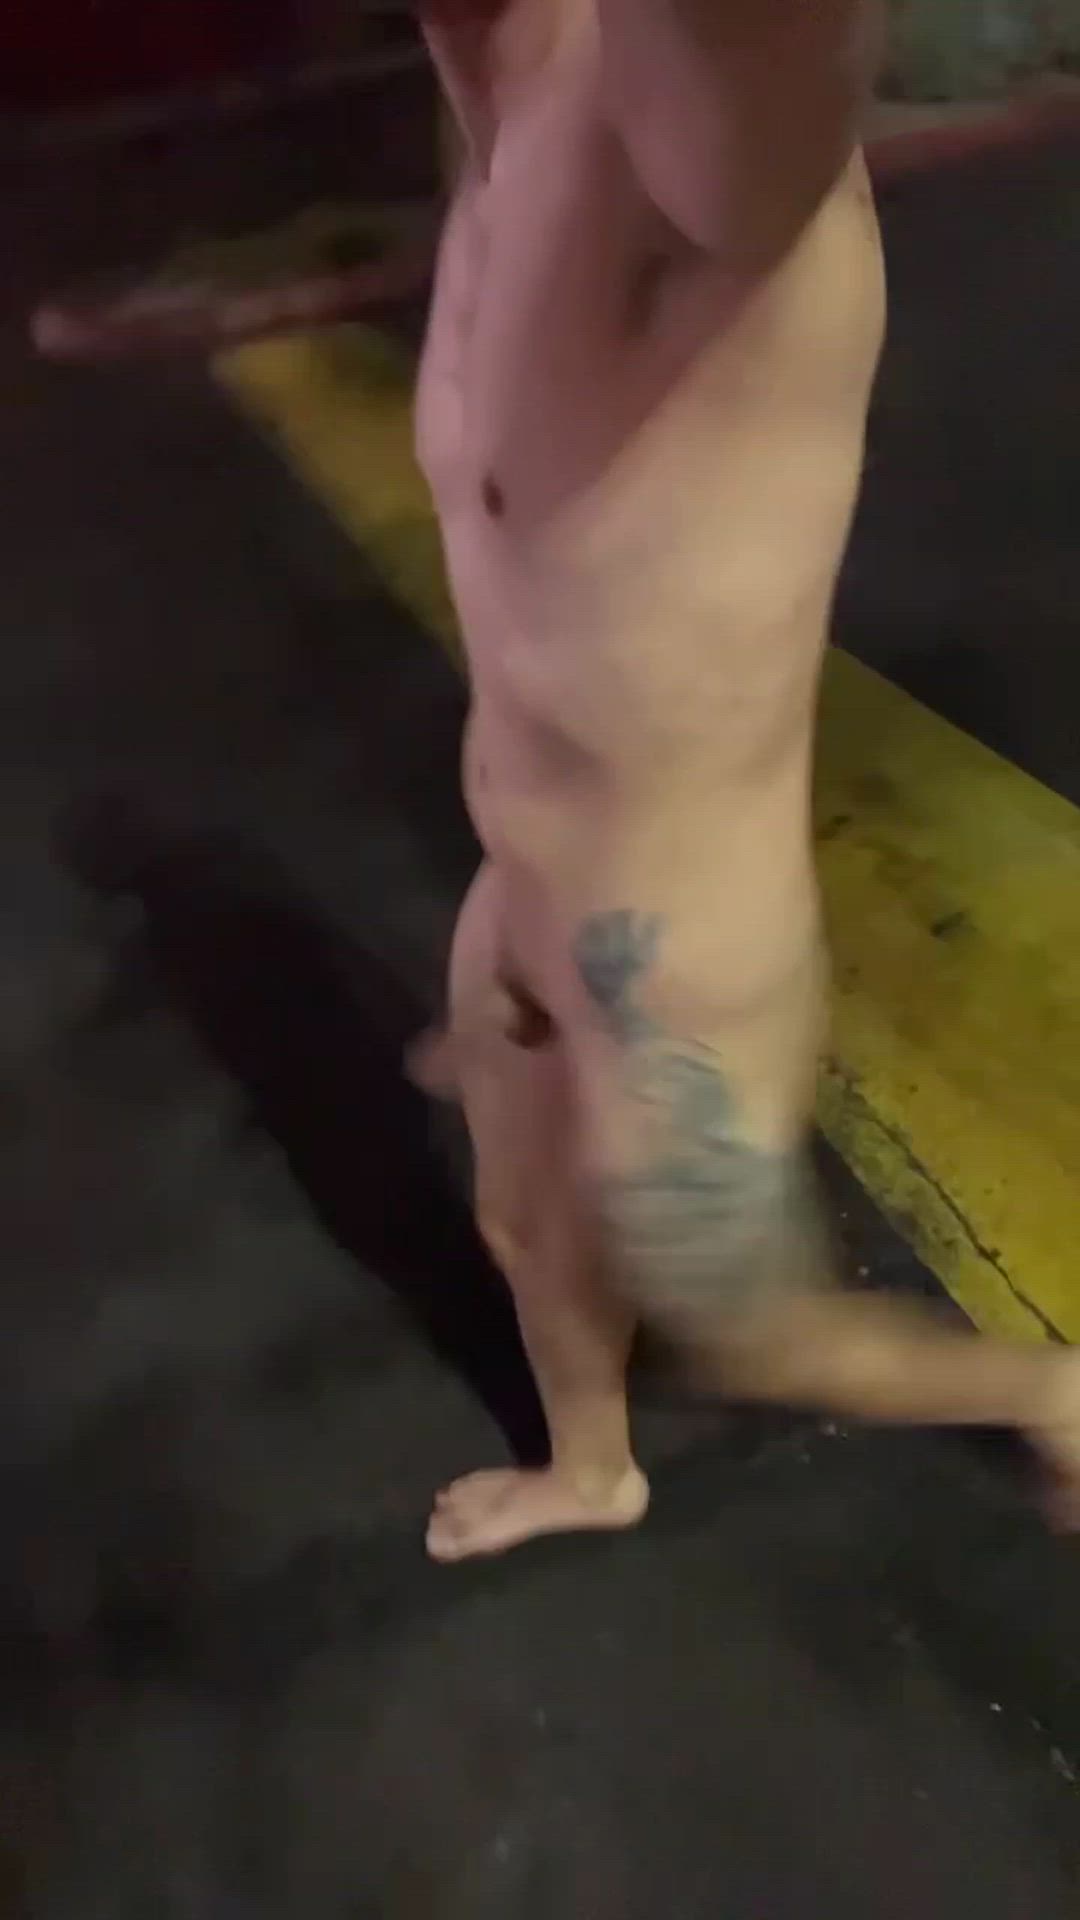 Ass porn video with onlyfans model freebodynerd <strong>@freebodynerd</strong>